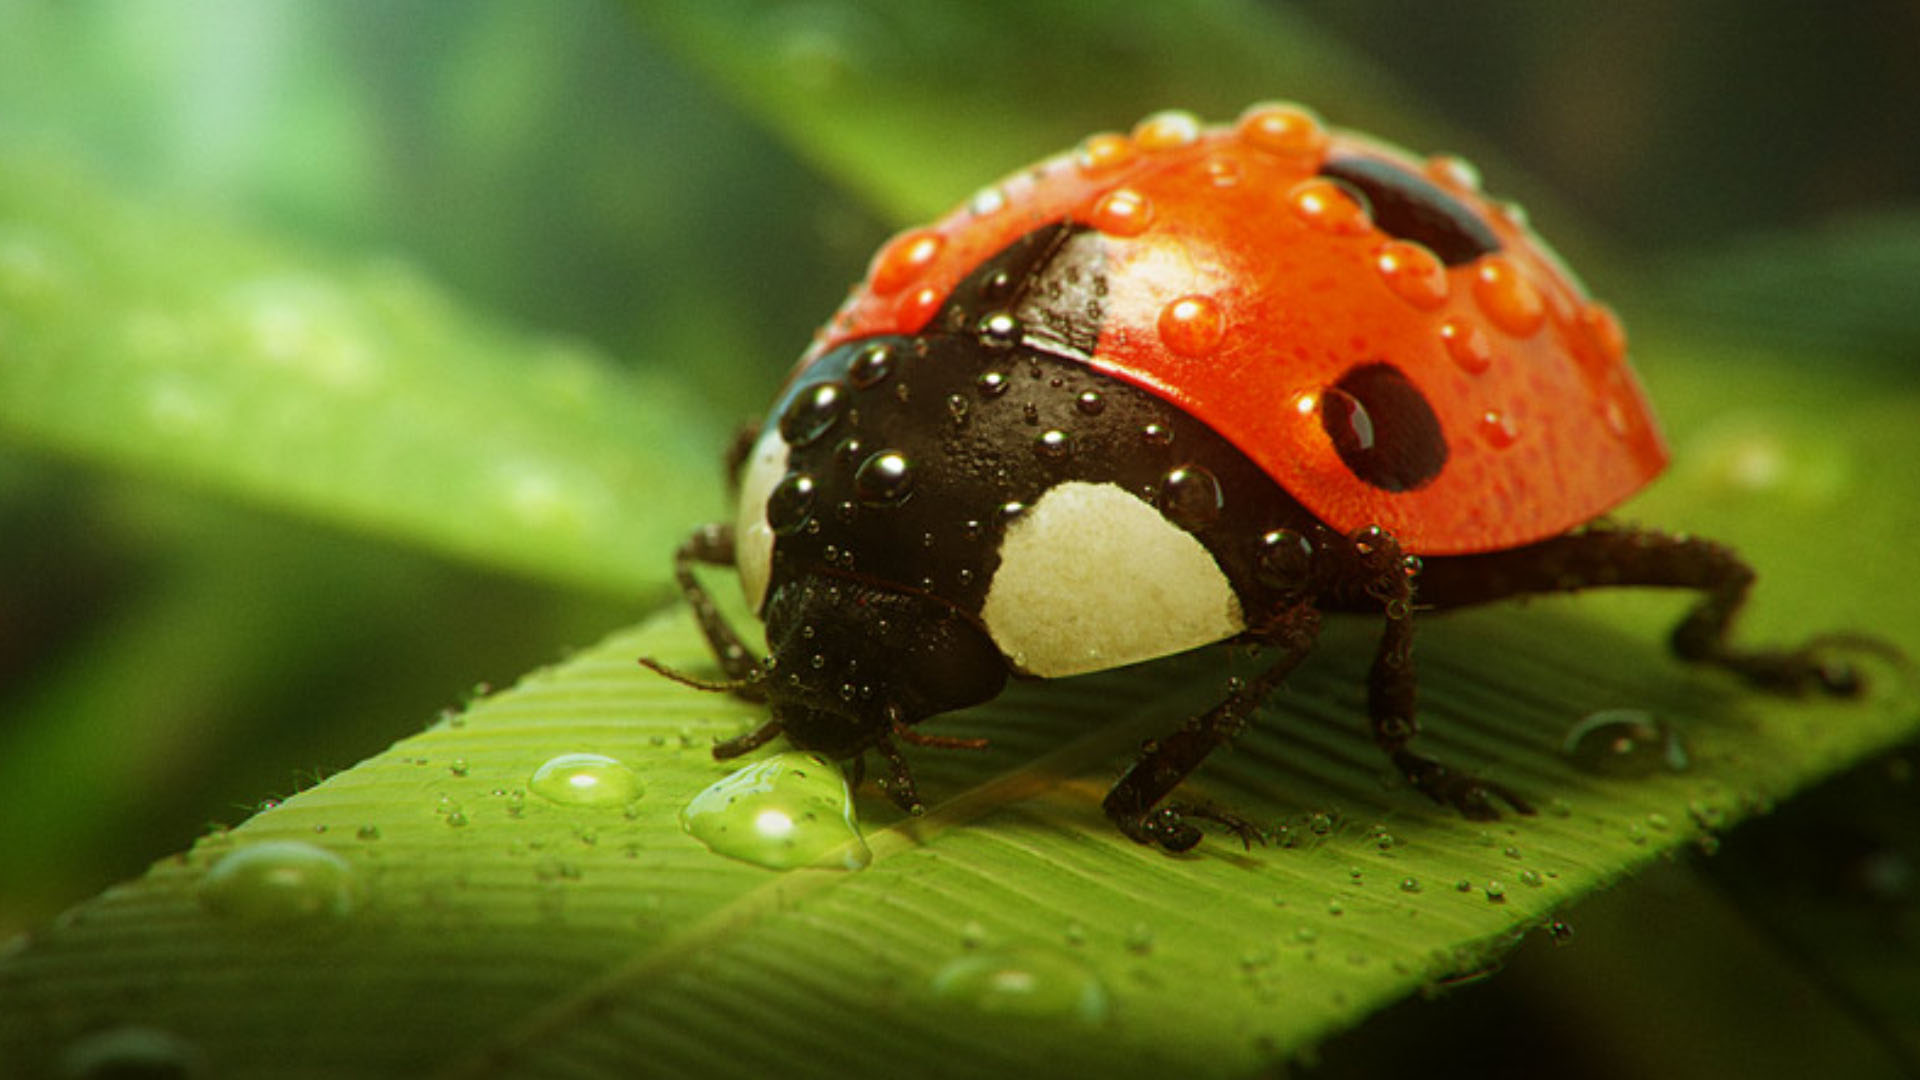 Cute Ladybug Wallpaper For Desktop